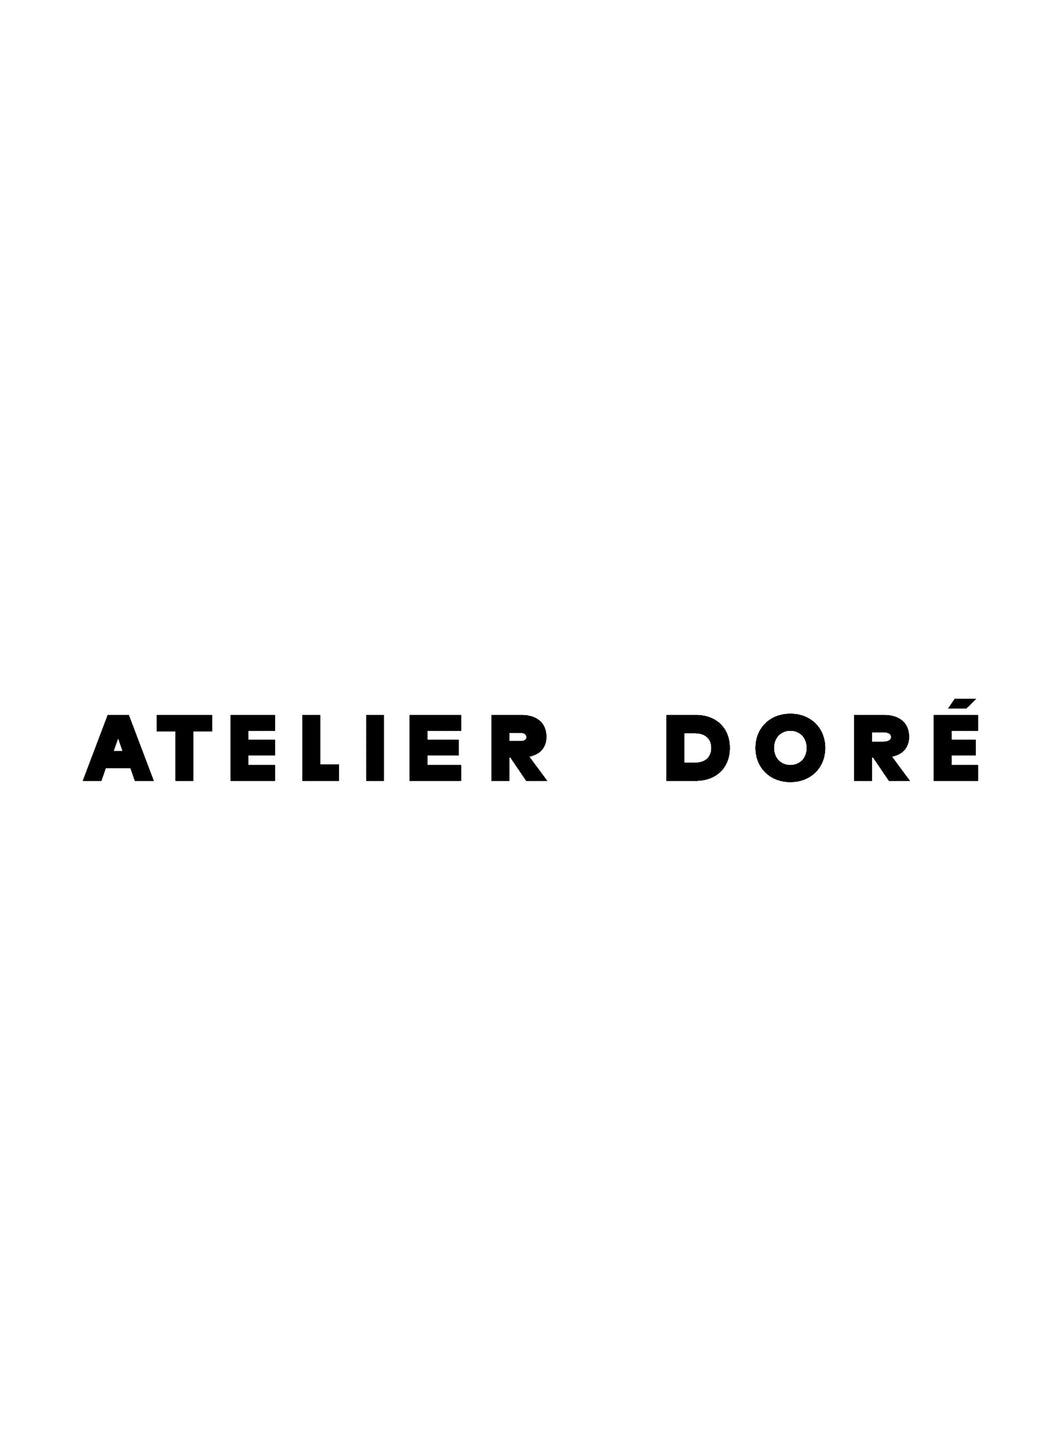 Atelier Dore